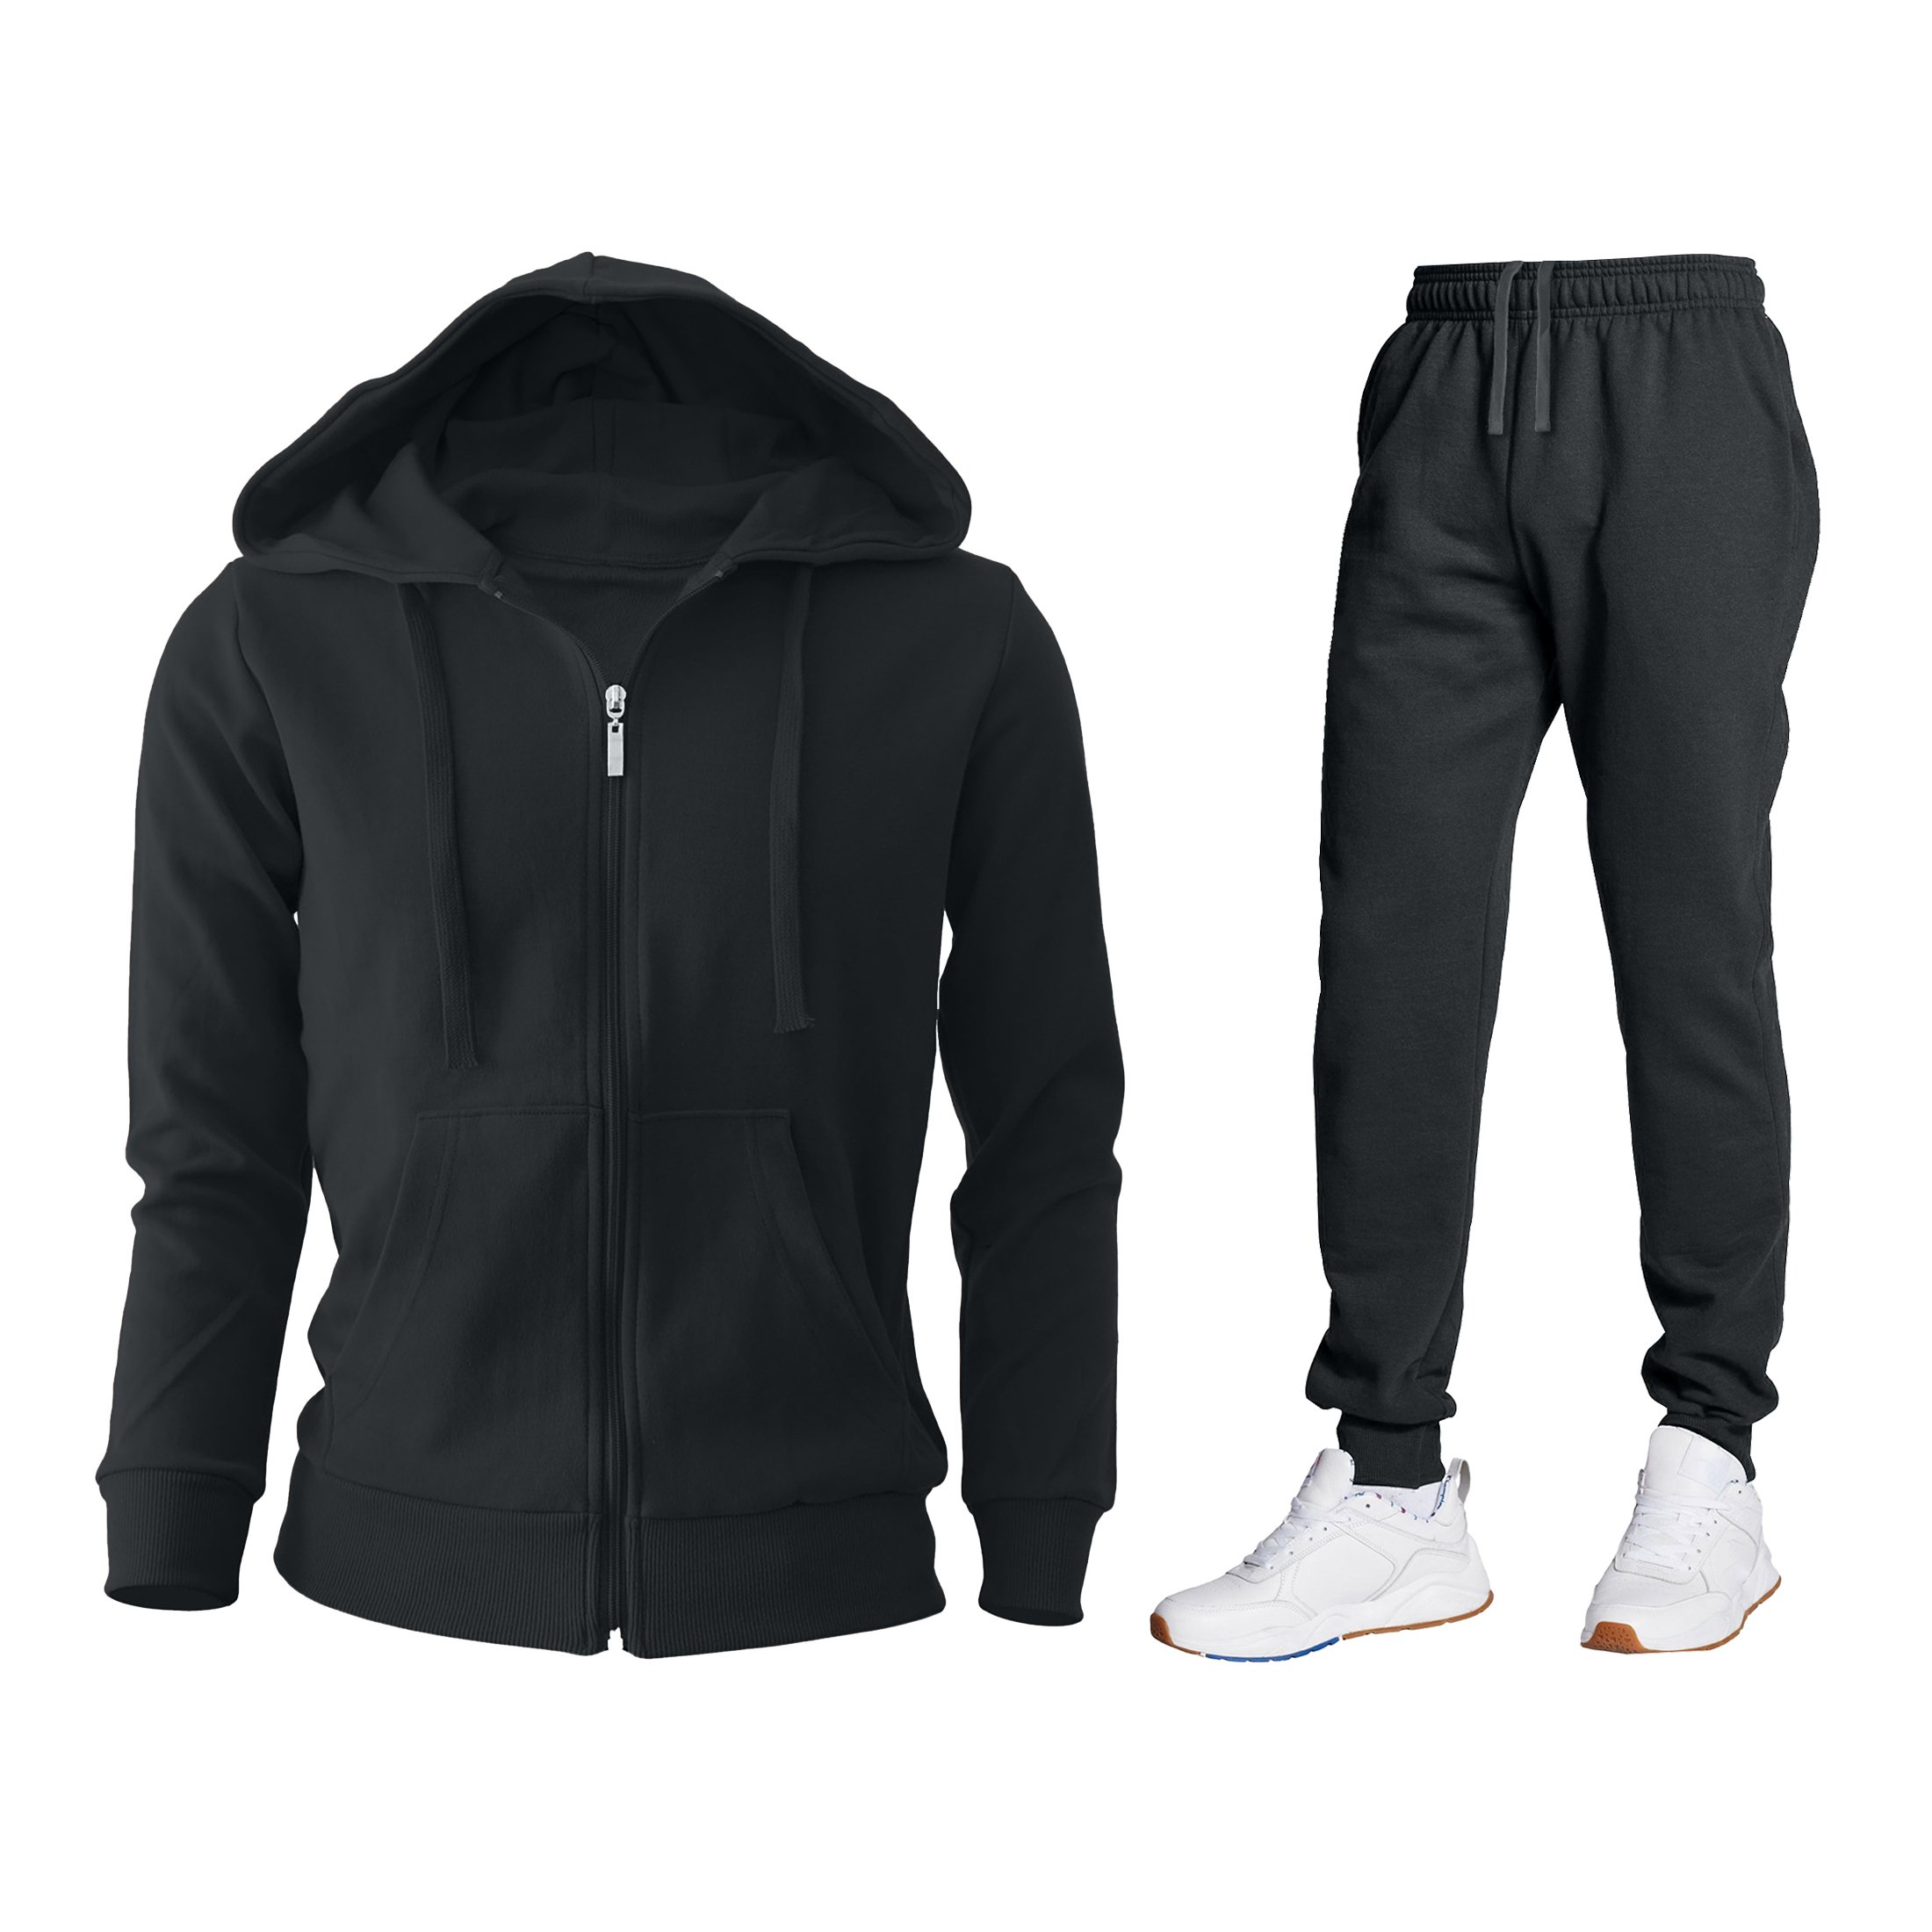 Men's Casual Jogging Suit Track Sports Zip Up Jogger Set - L